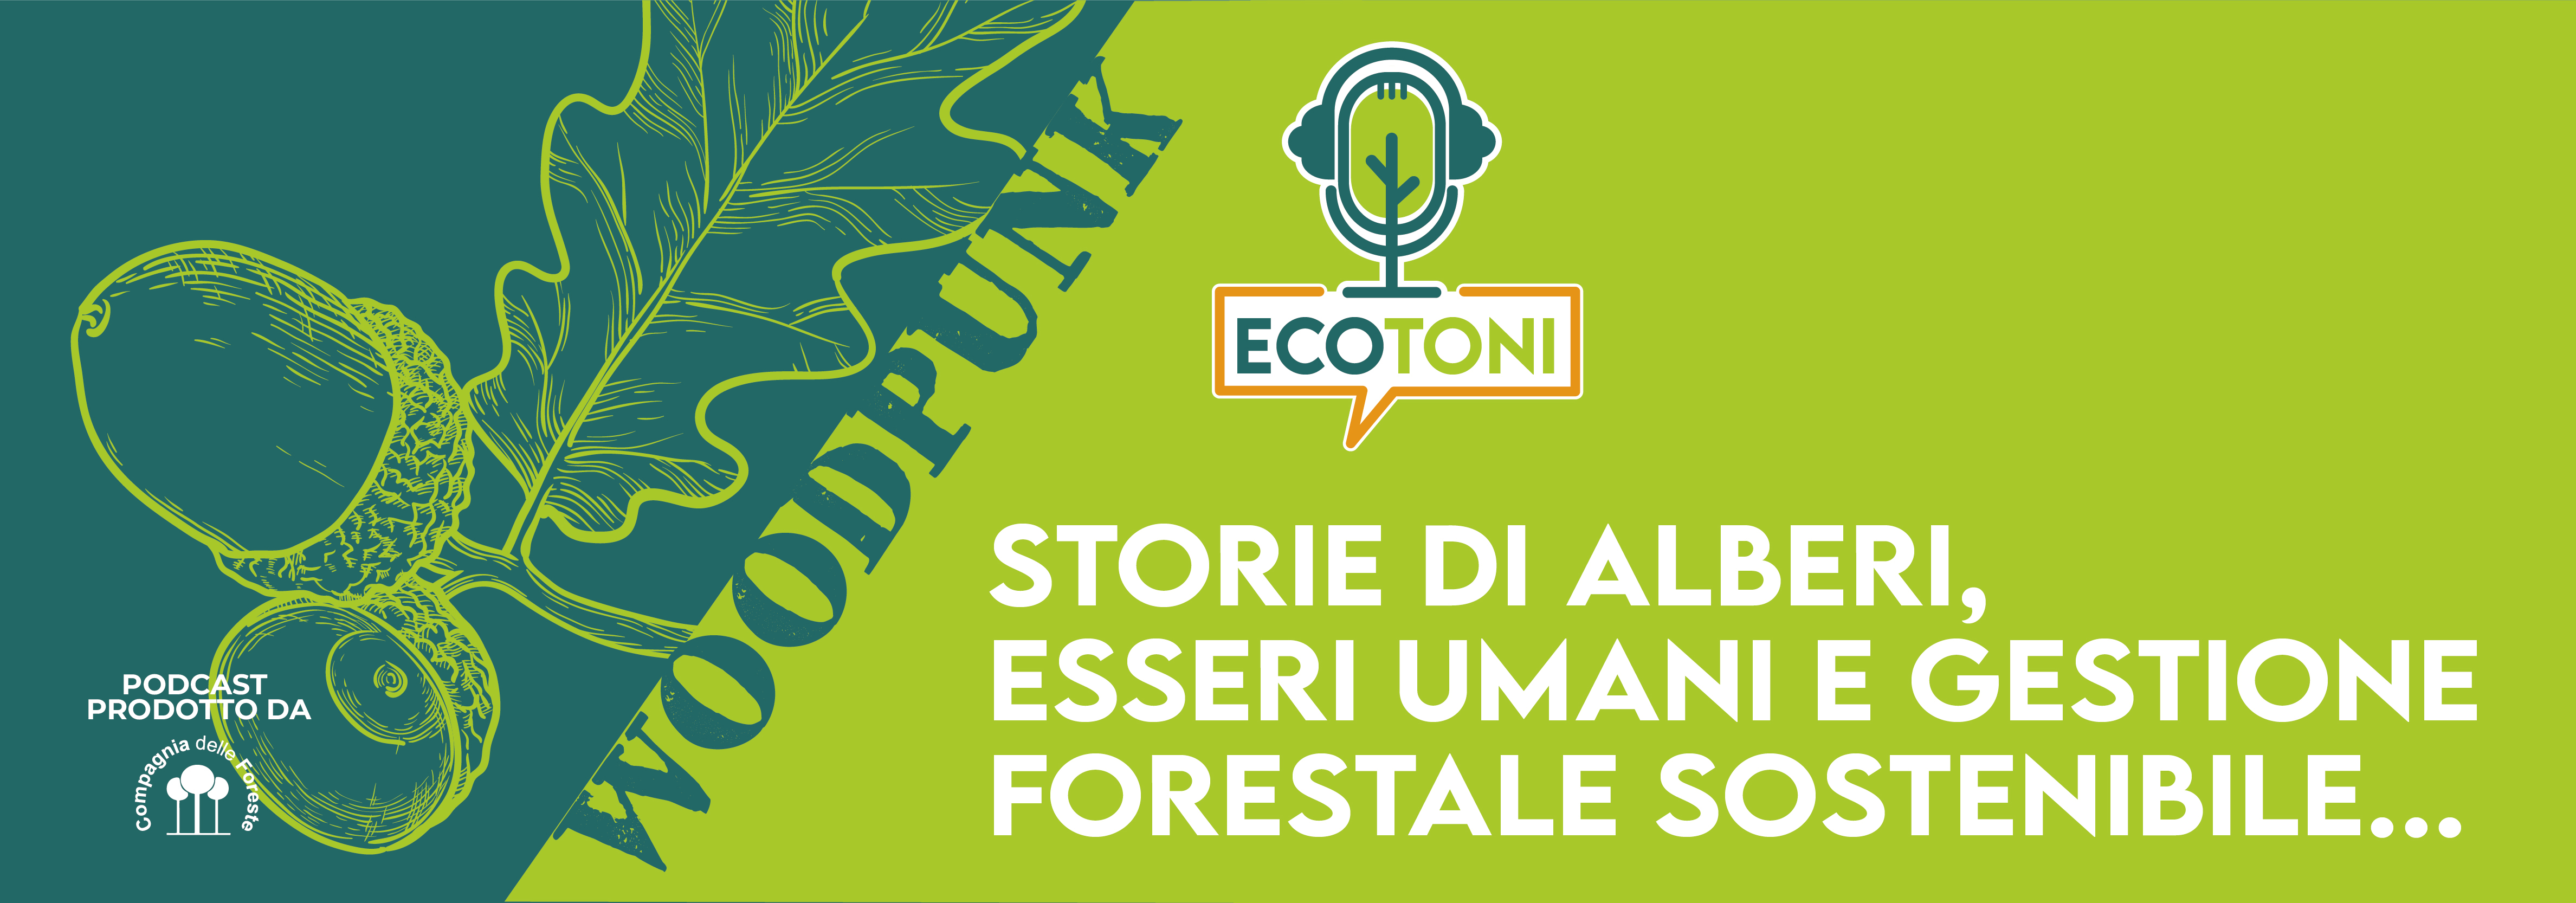 Ecotoni podcast banner